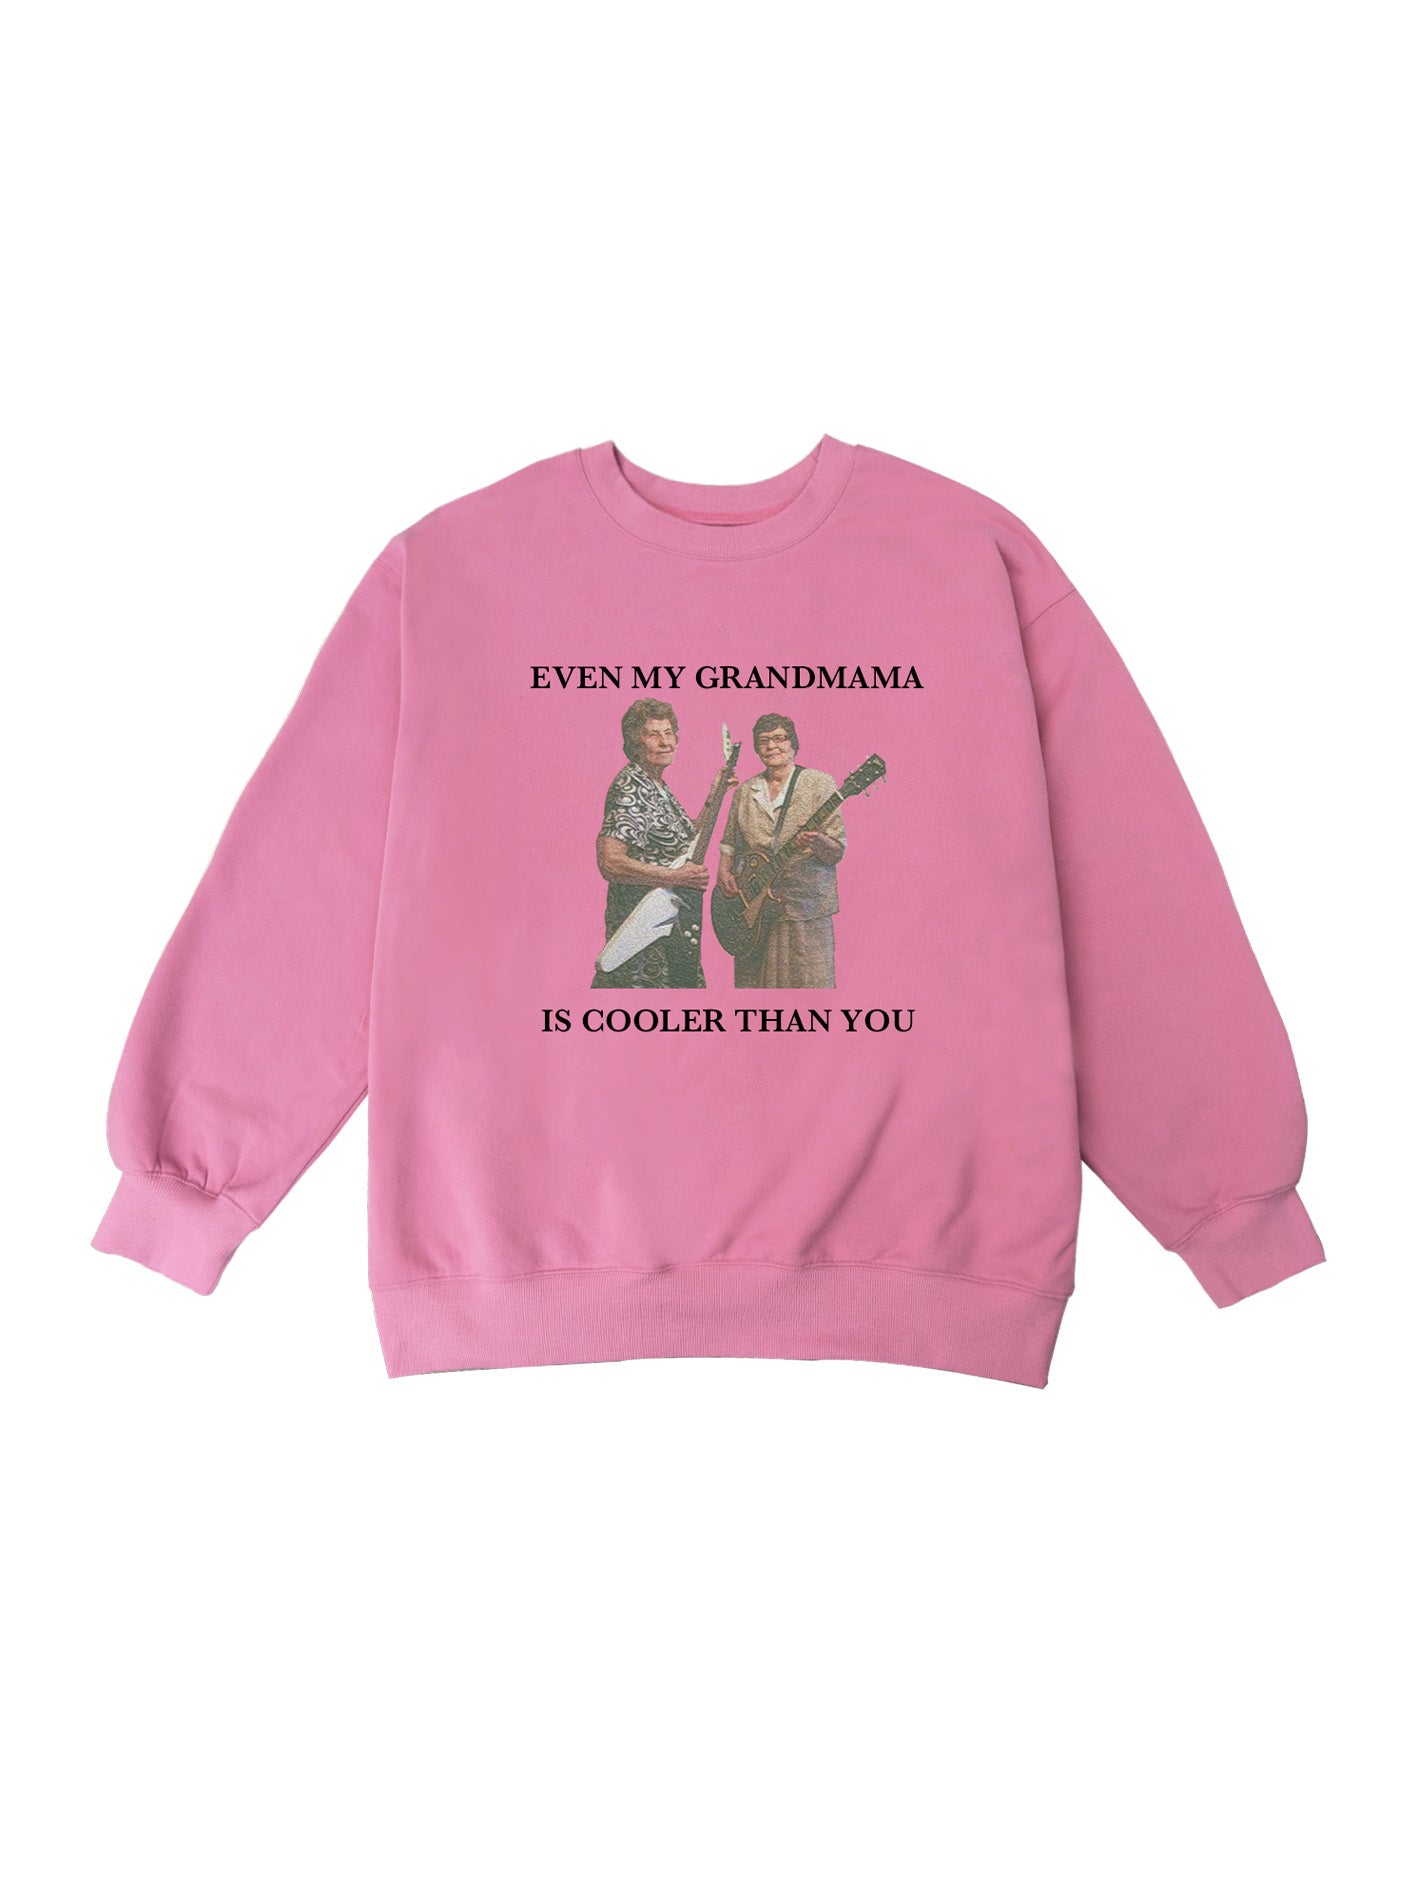  black type Grandmama Band sweatshirt